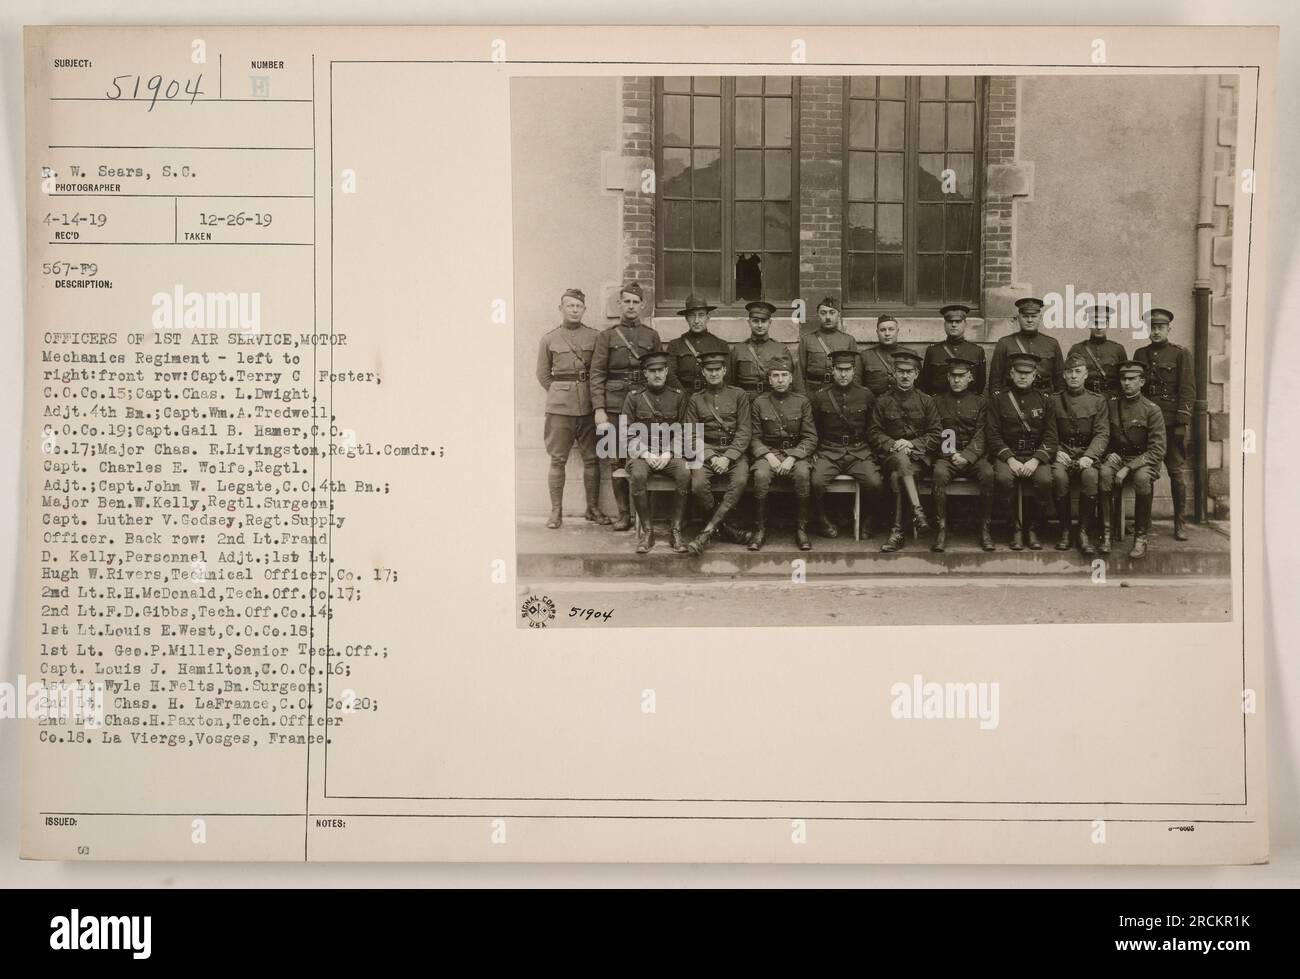 Caption: Officers of the 1st Air Service, Motor Mechanics Regiment, pictured at La Vierge, Vosges, France. The image features a front row, left to right: Capt. Terry C. Fester, C.C. Co.15; Capt. Chas. L. Dwight, Adjt. 4th B.; Capt. W.A. Tredwell, C.O. Co.19; Capt.Gail B. Hamer, C.C. Co.17; Major Chas. E. Livingston, Regtl. Comdr.; Capt. Charles E. Wolfe, Regtl. Adjt.; Capt. John W. Legate, C.O. 4th Bn.; Major Ben. W. Kelly, Regtl. Surgeon; Capt. Luther V. Godaey, Regt. Supply Officer. Back row: 2nd Lt. Frand D. Kelly, Personnel Adjt.; 1st Lt. Hugh W. Rivers, Technical Officer, Co. 17; 2nd Lt. Stock Photo